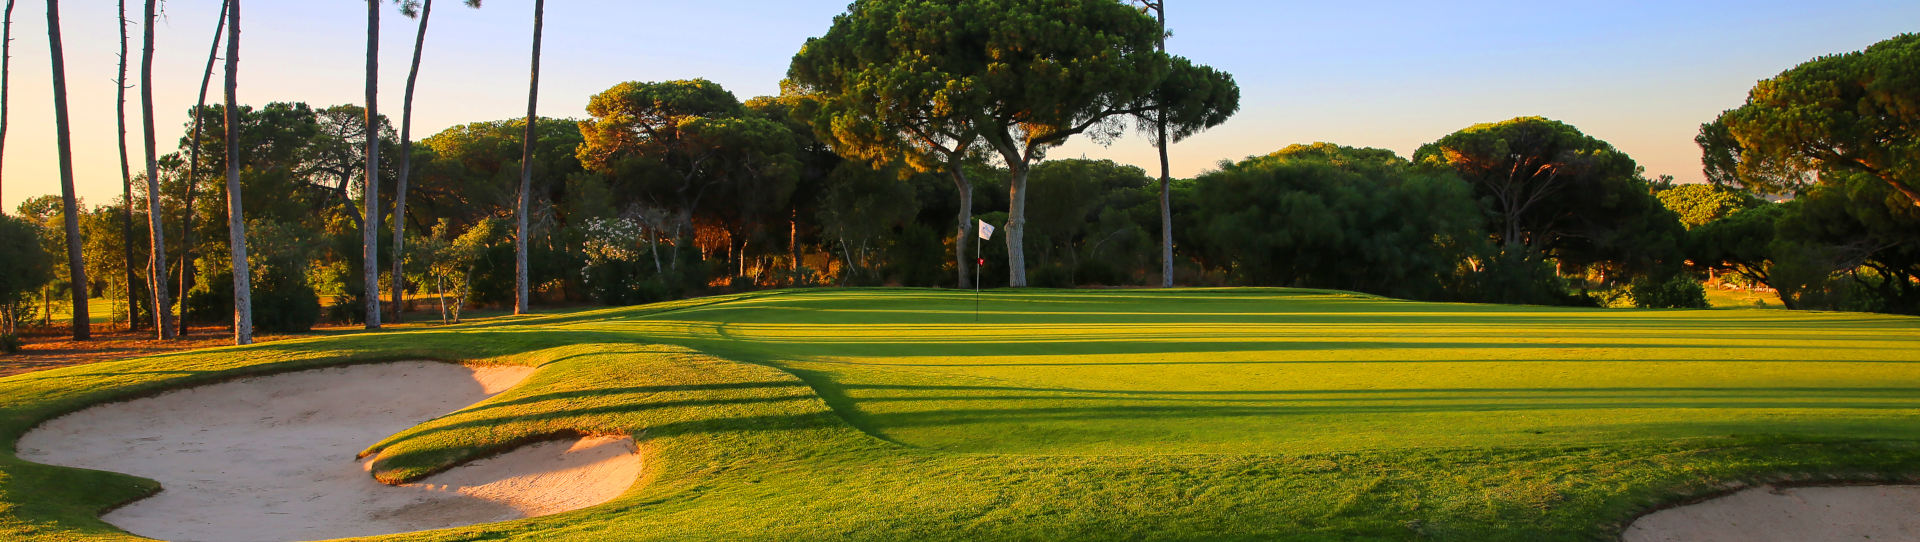 Portugal golf courses - Vilamoura Dom Pedro Old Course - Photo 1